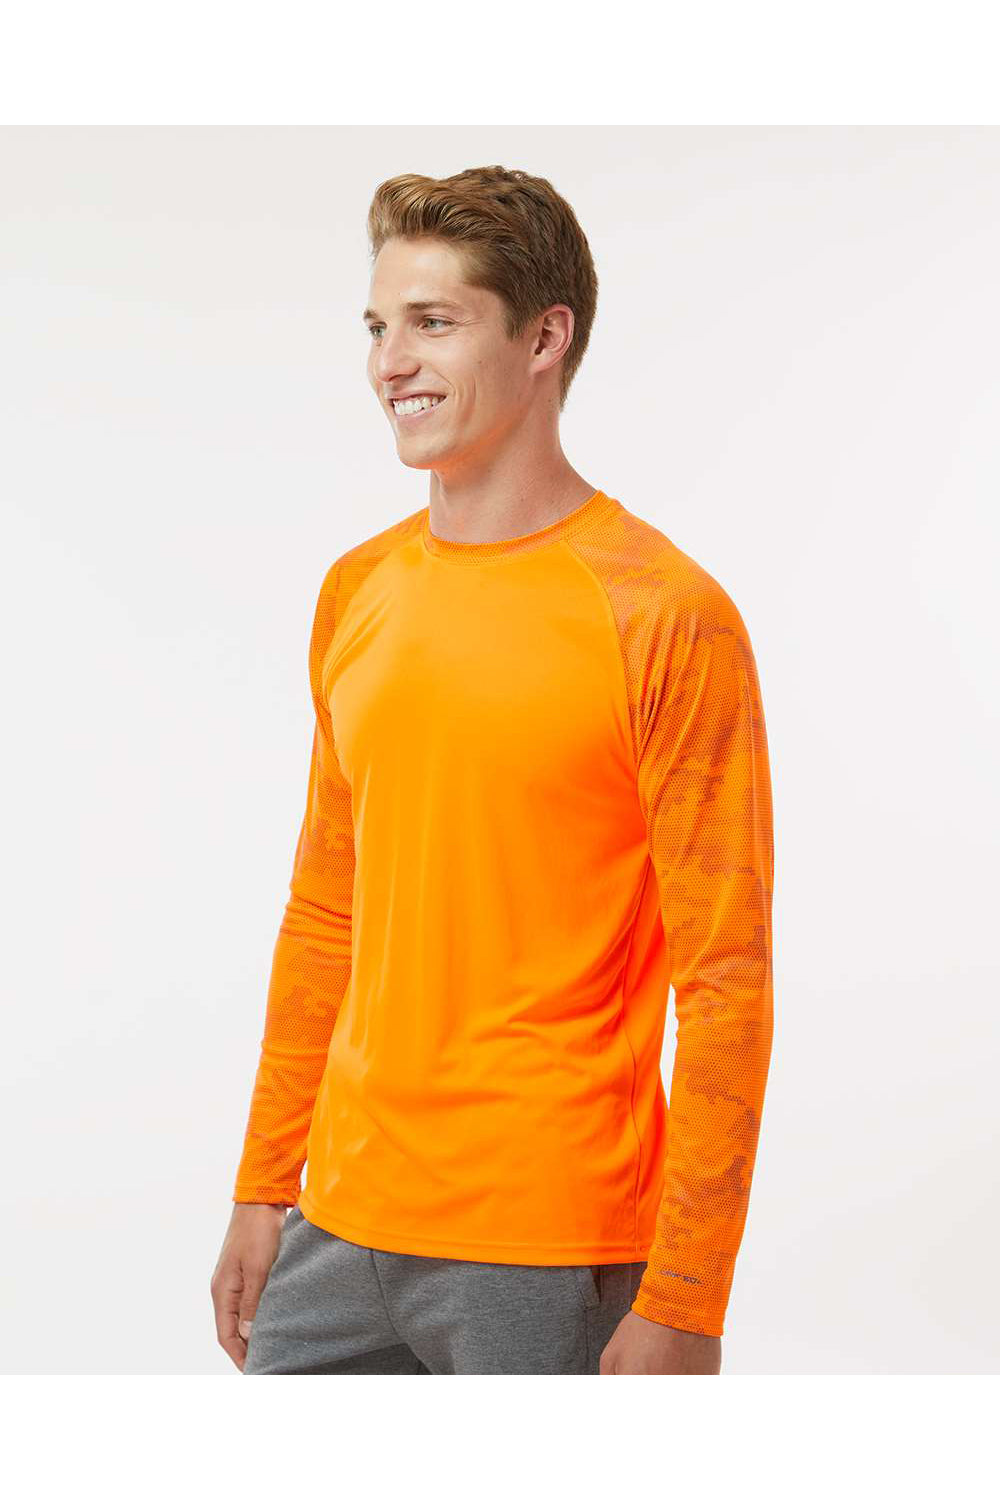 Paragon 216 Mens Cayman Performance Camo Colorblocked Long Sleeve Crewneck T-Shirt Neon Orange Model Side